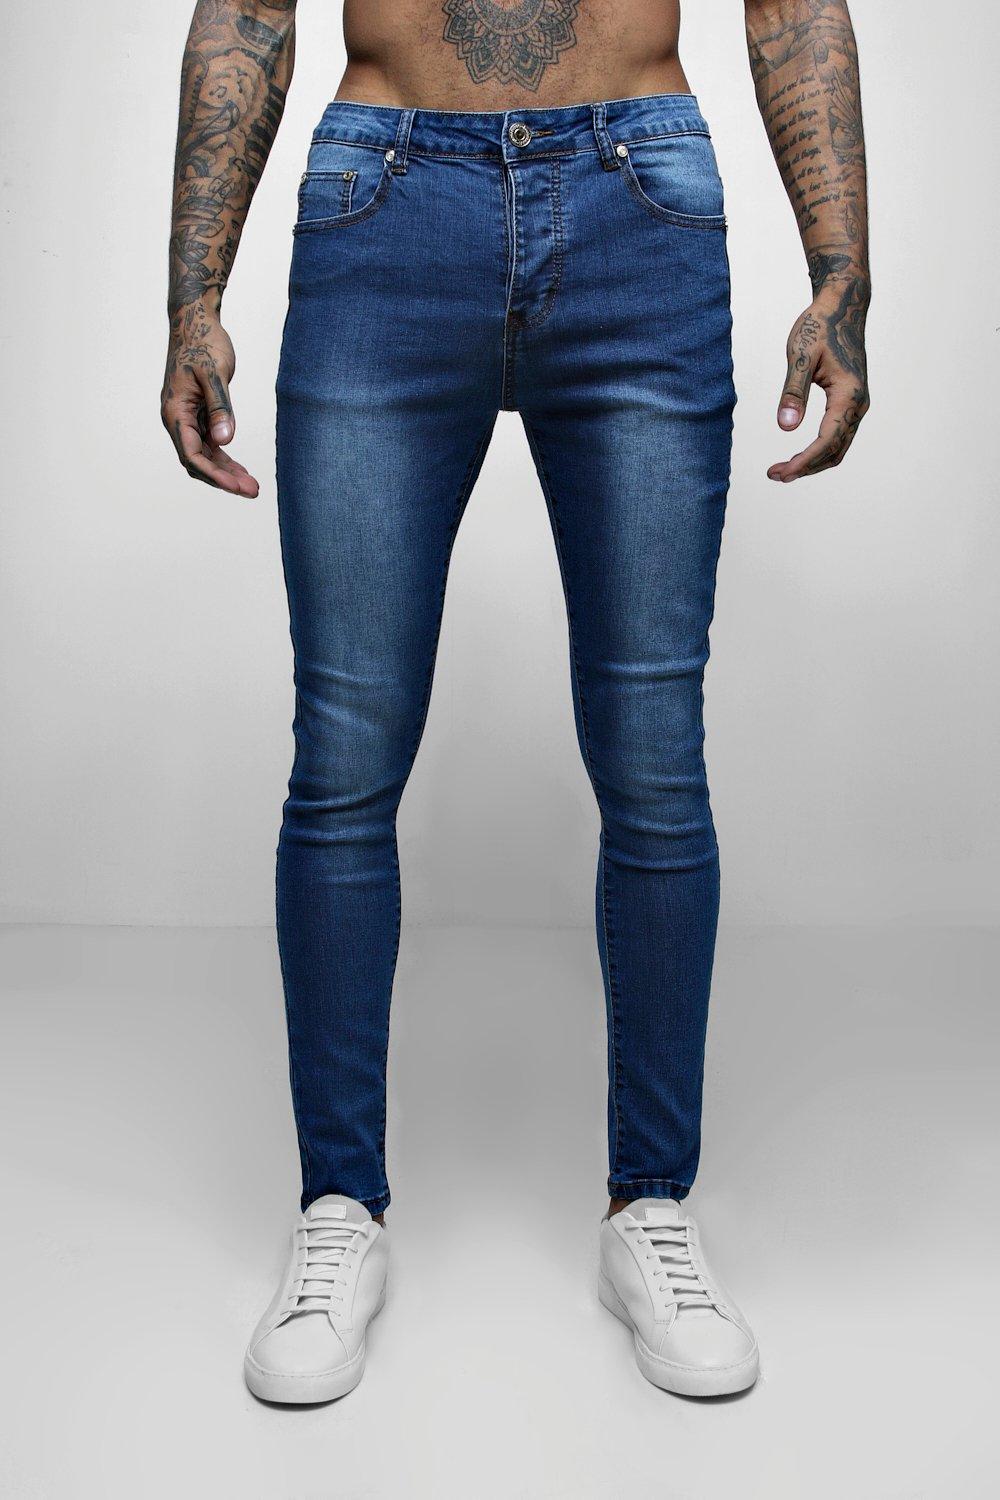 boohooman skinny jeans